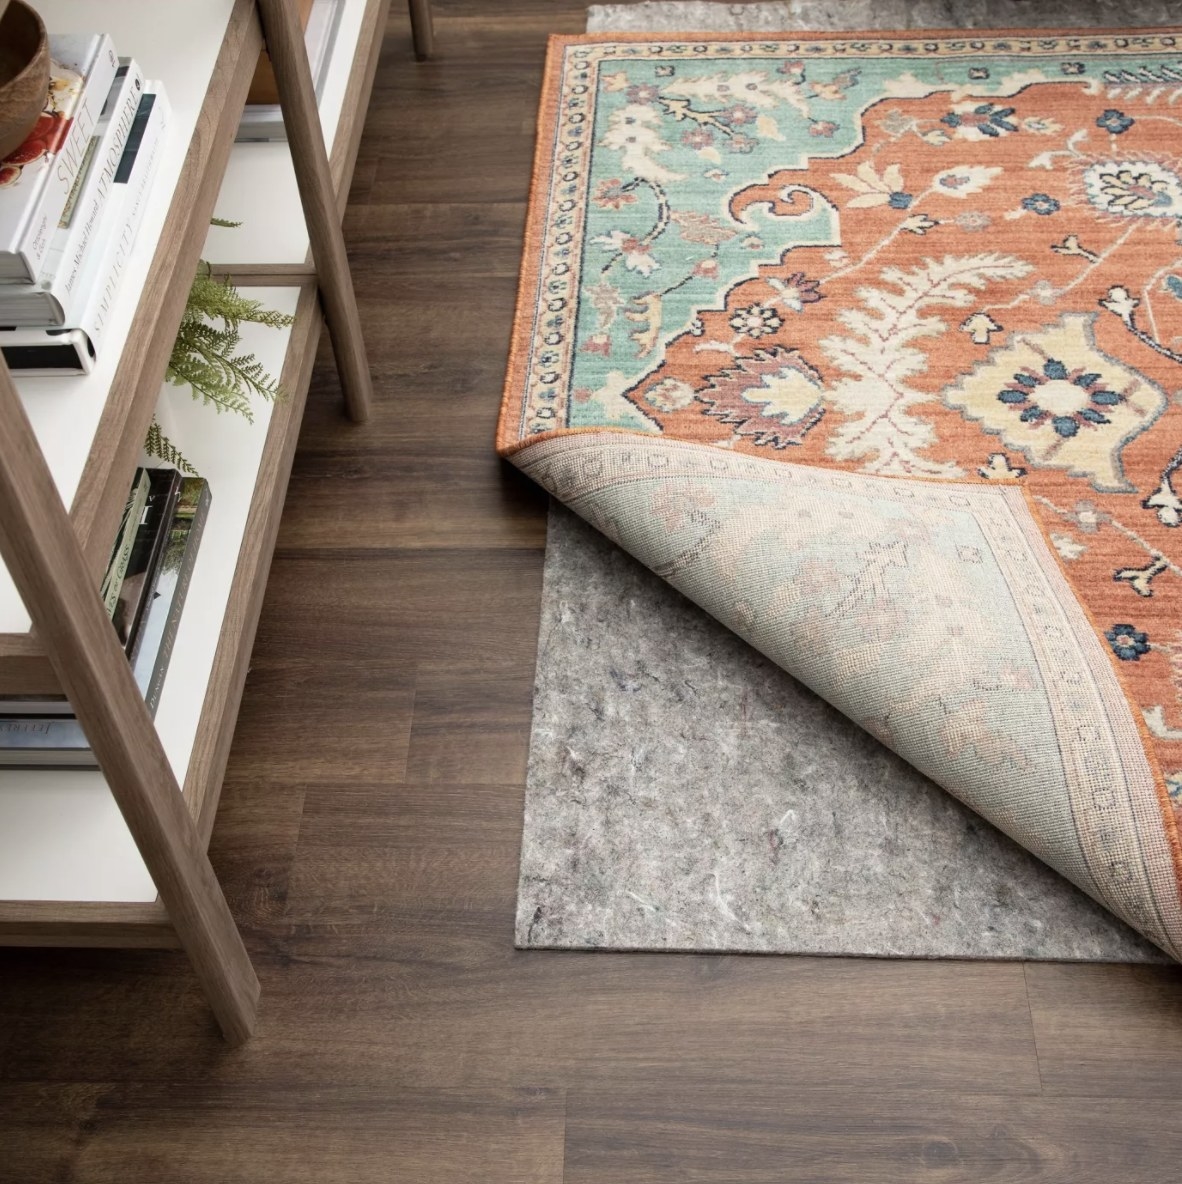 The grey rug is underneath a multicolored rug on a dark wooden floor